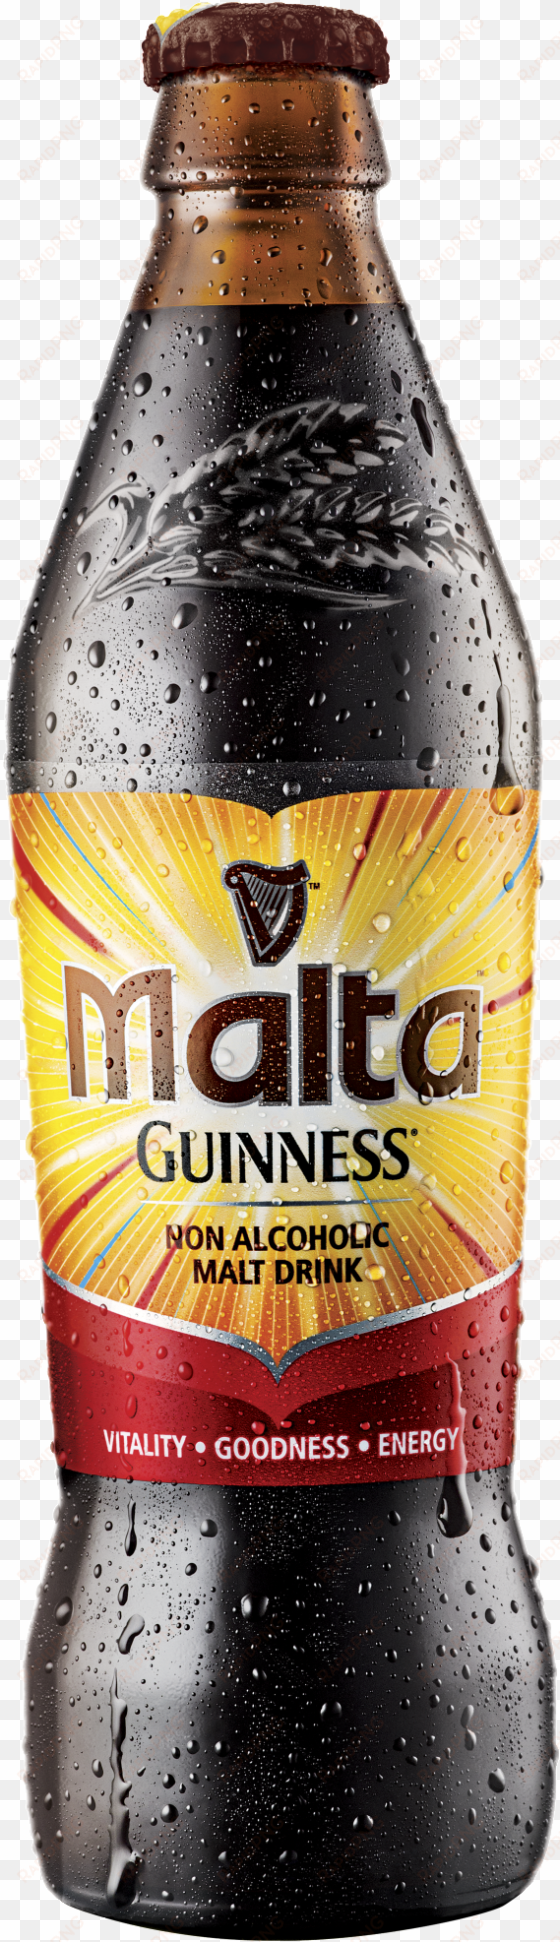 malta guinness - malt drink